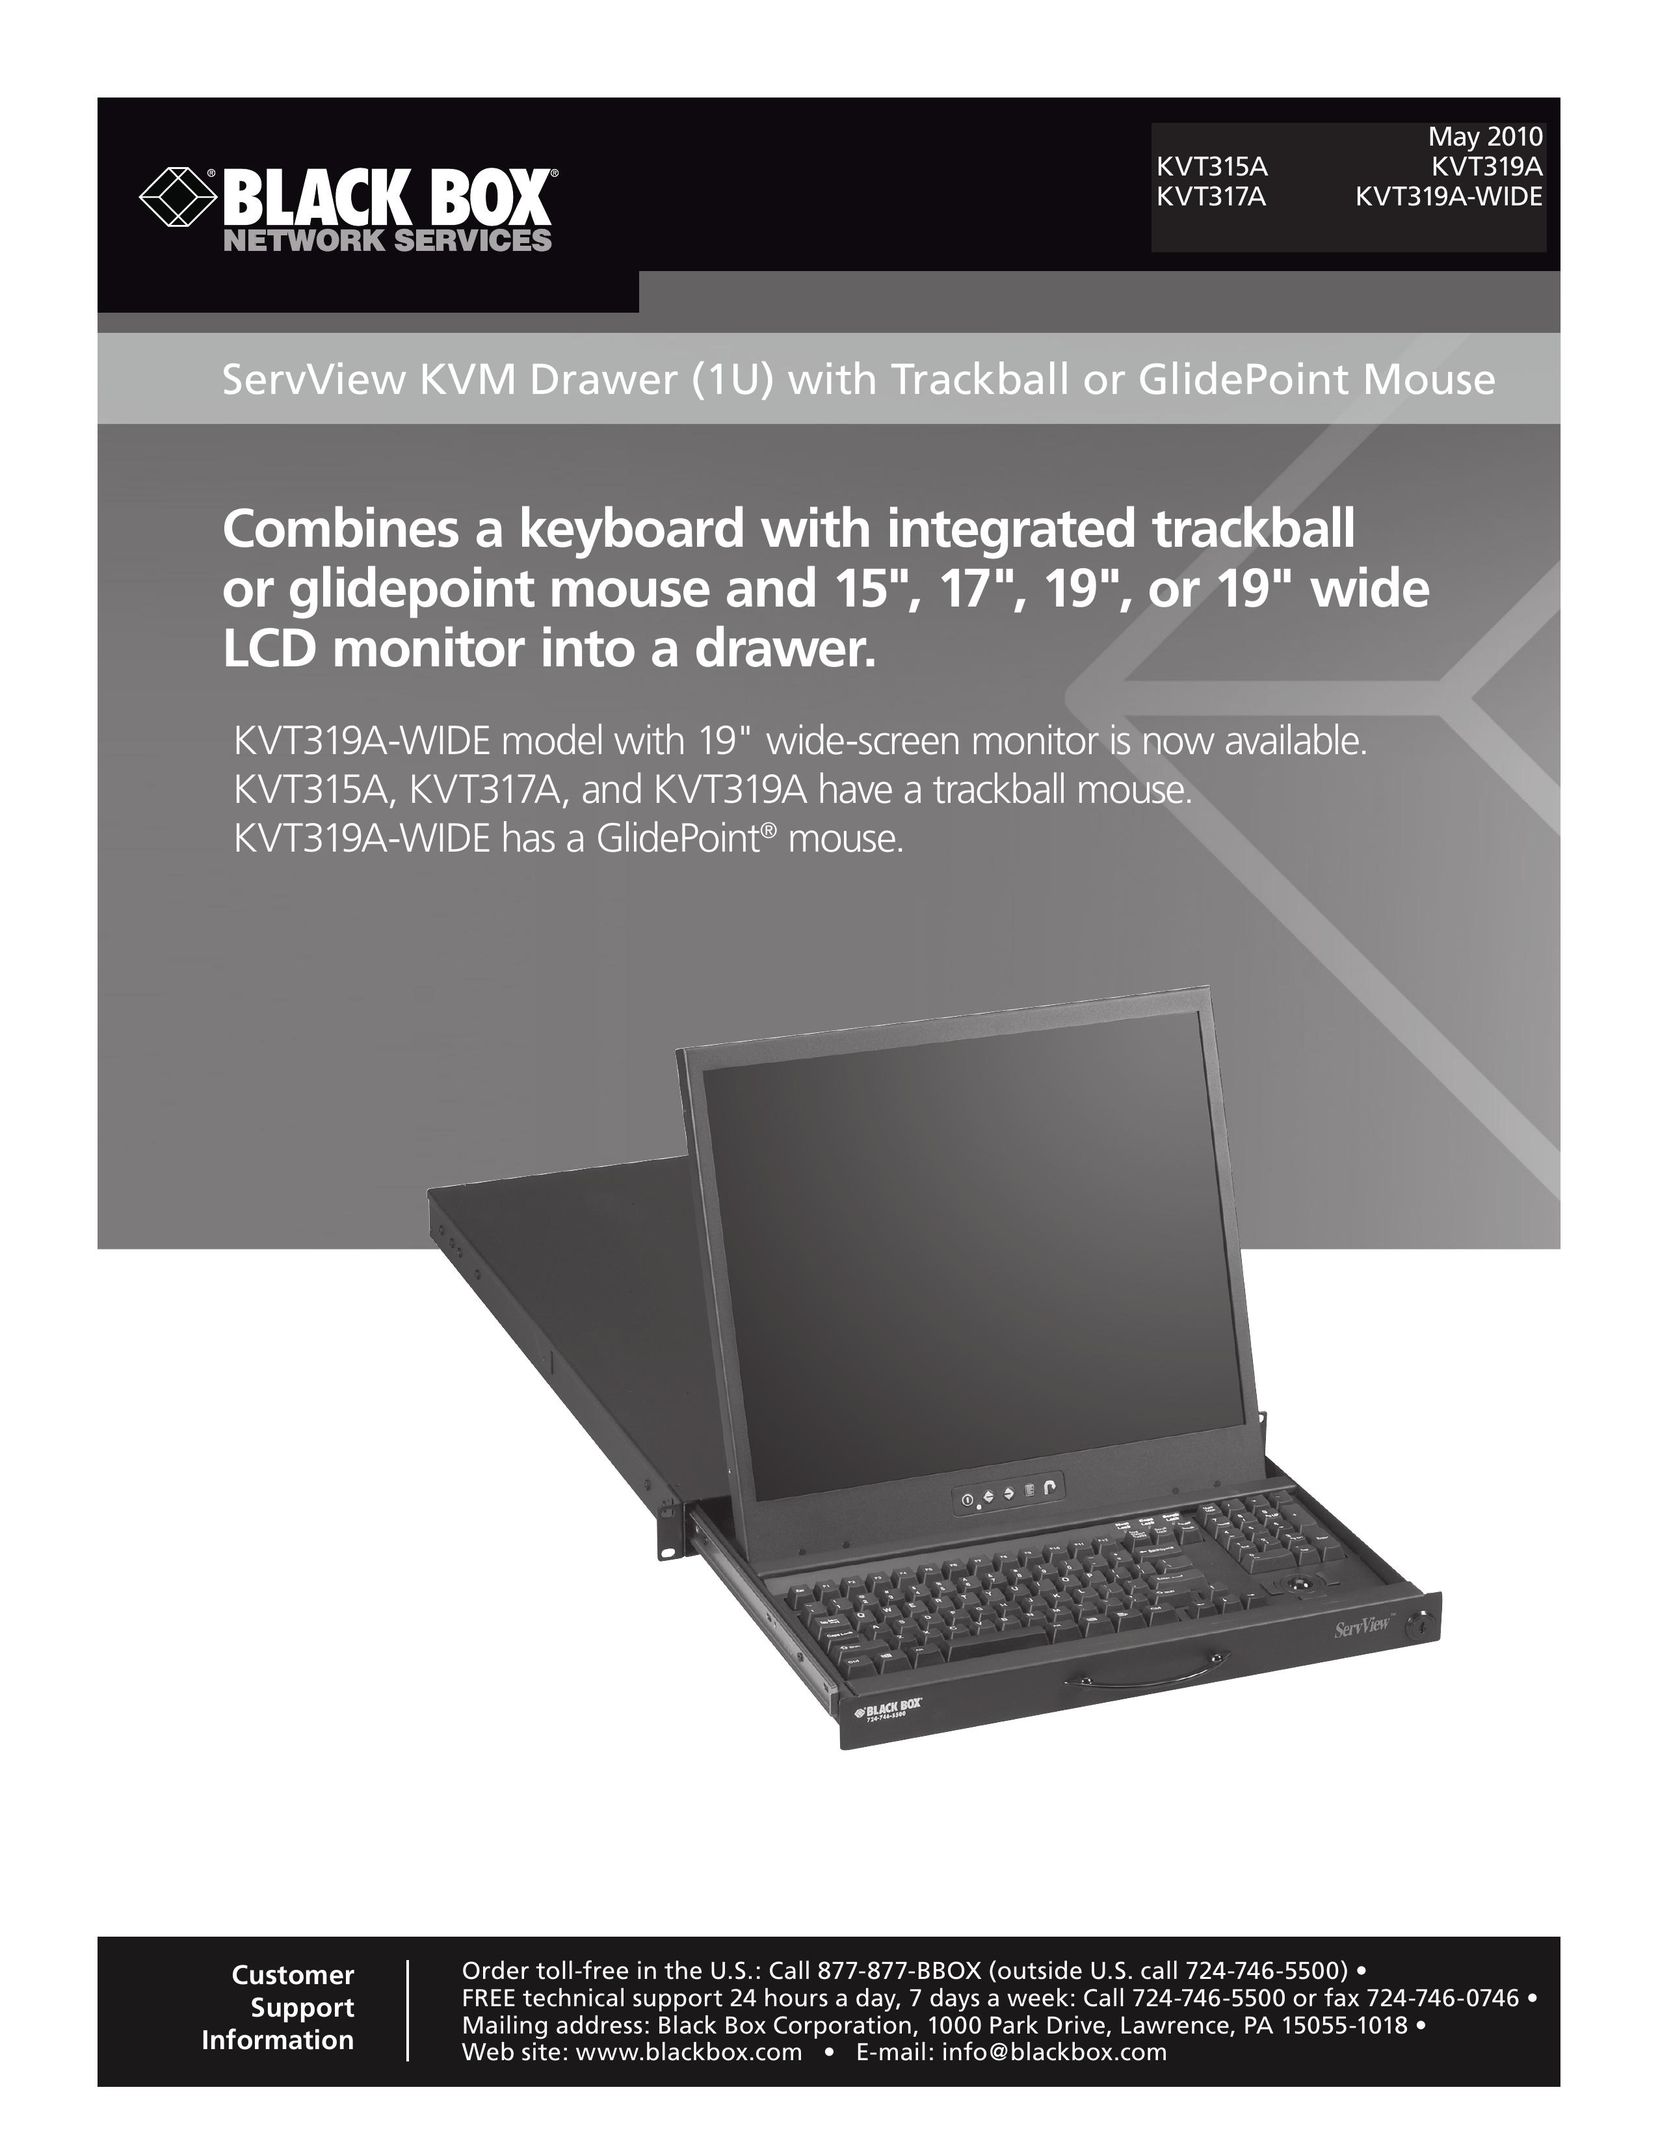 Black Box KVT315A Personal Computer User Manual